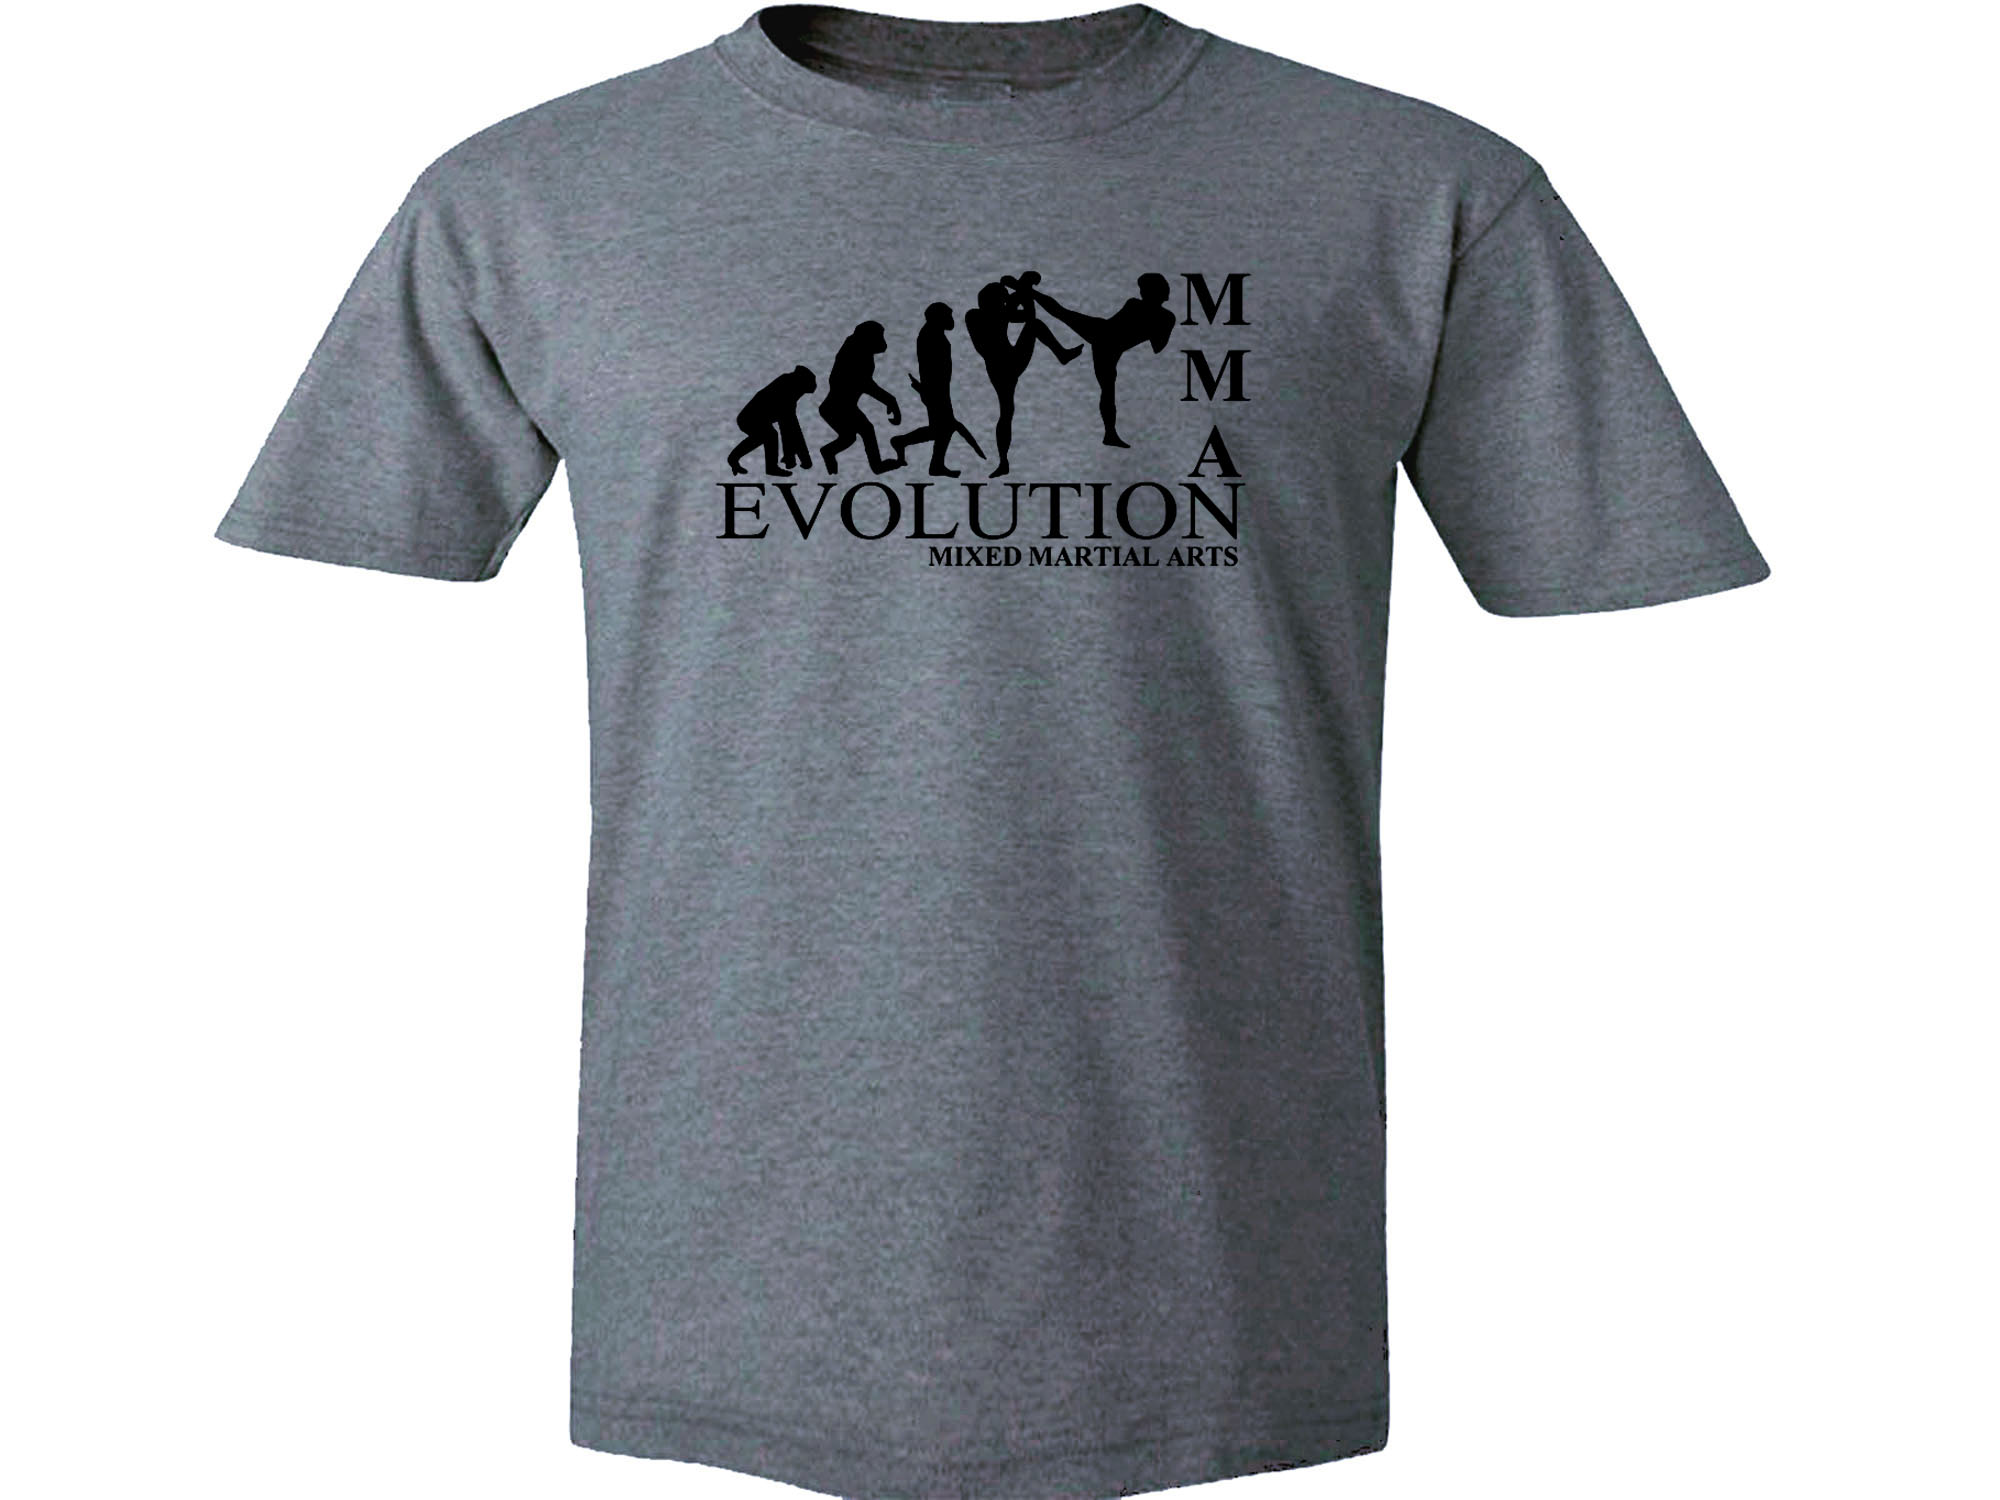 MMA evolution mixed martial arts gray t-shirt